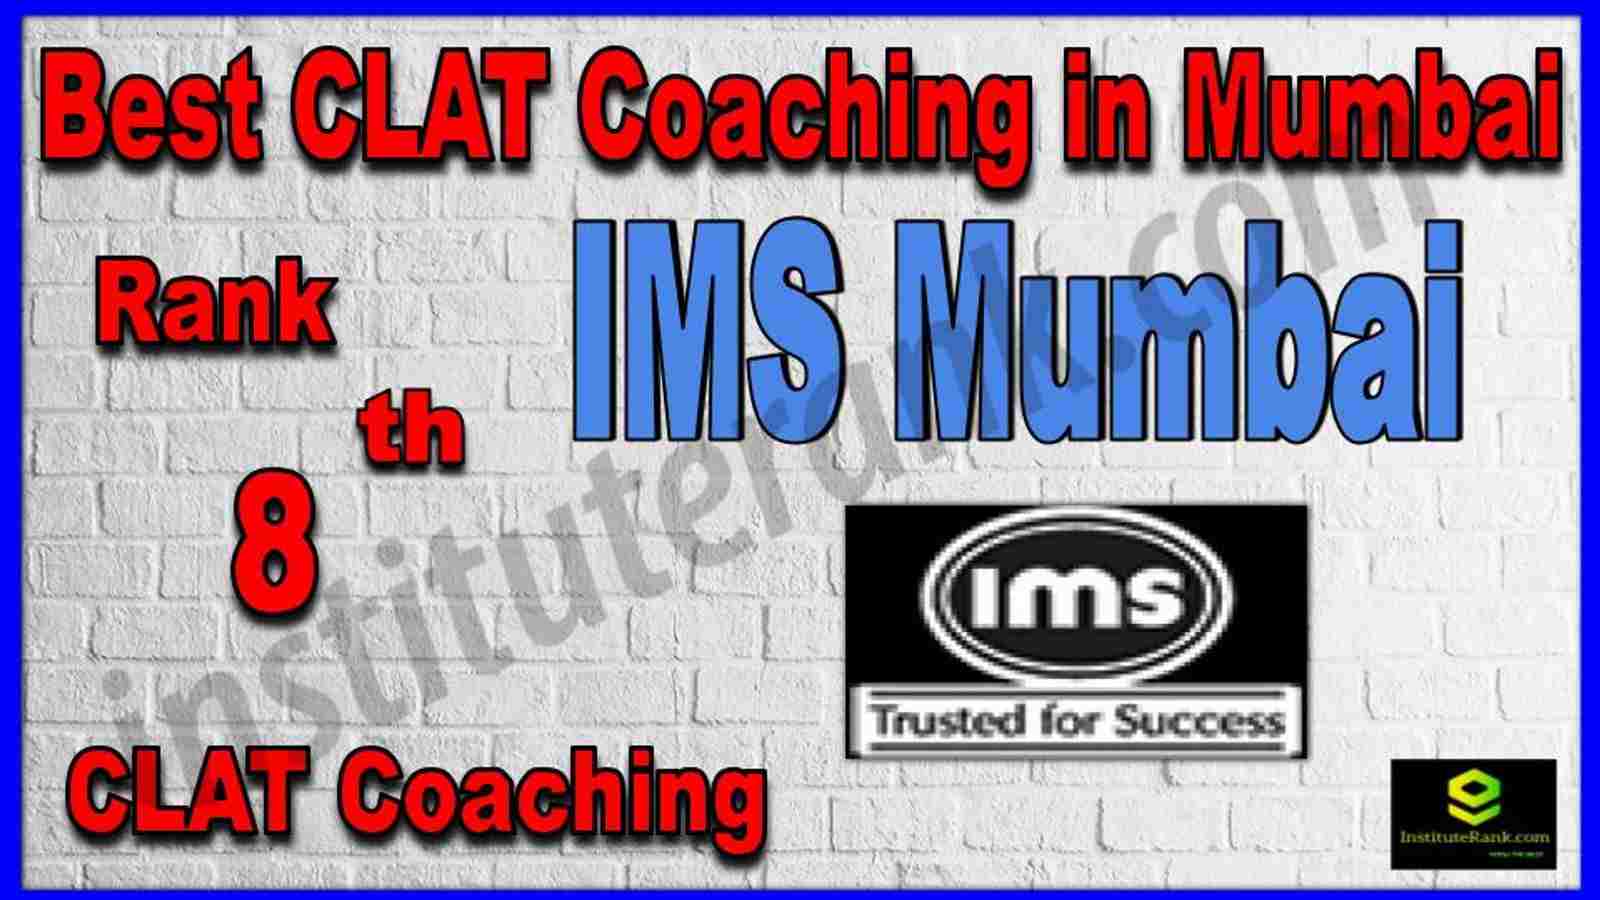 Rank 8th Best Clat Coaching in Mumbai